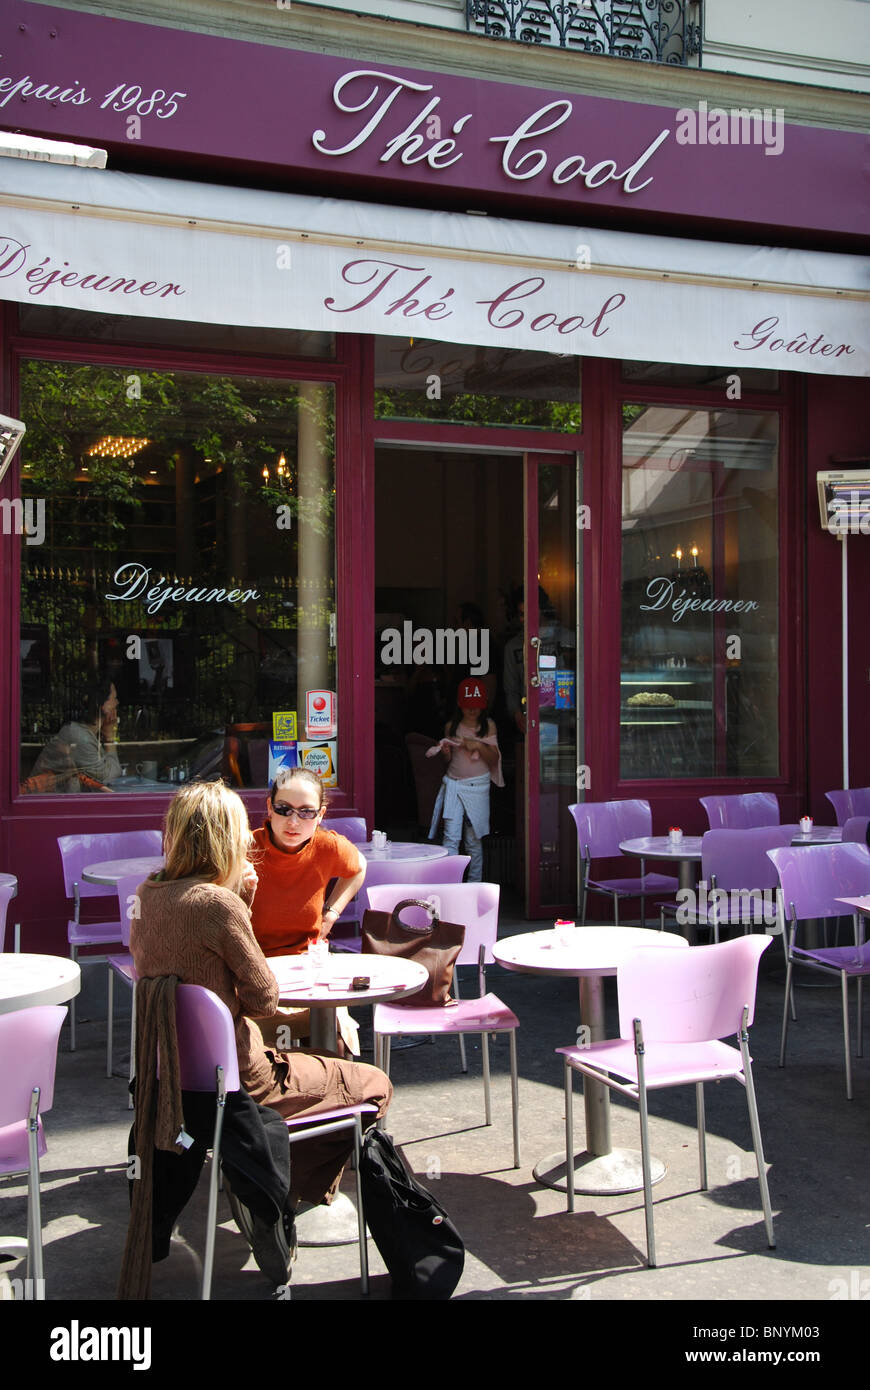 Thé Cool, typical tearoom near Jardin du Luxembourg, Paris France Stock Photo